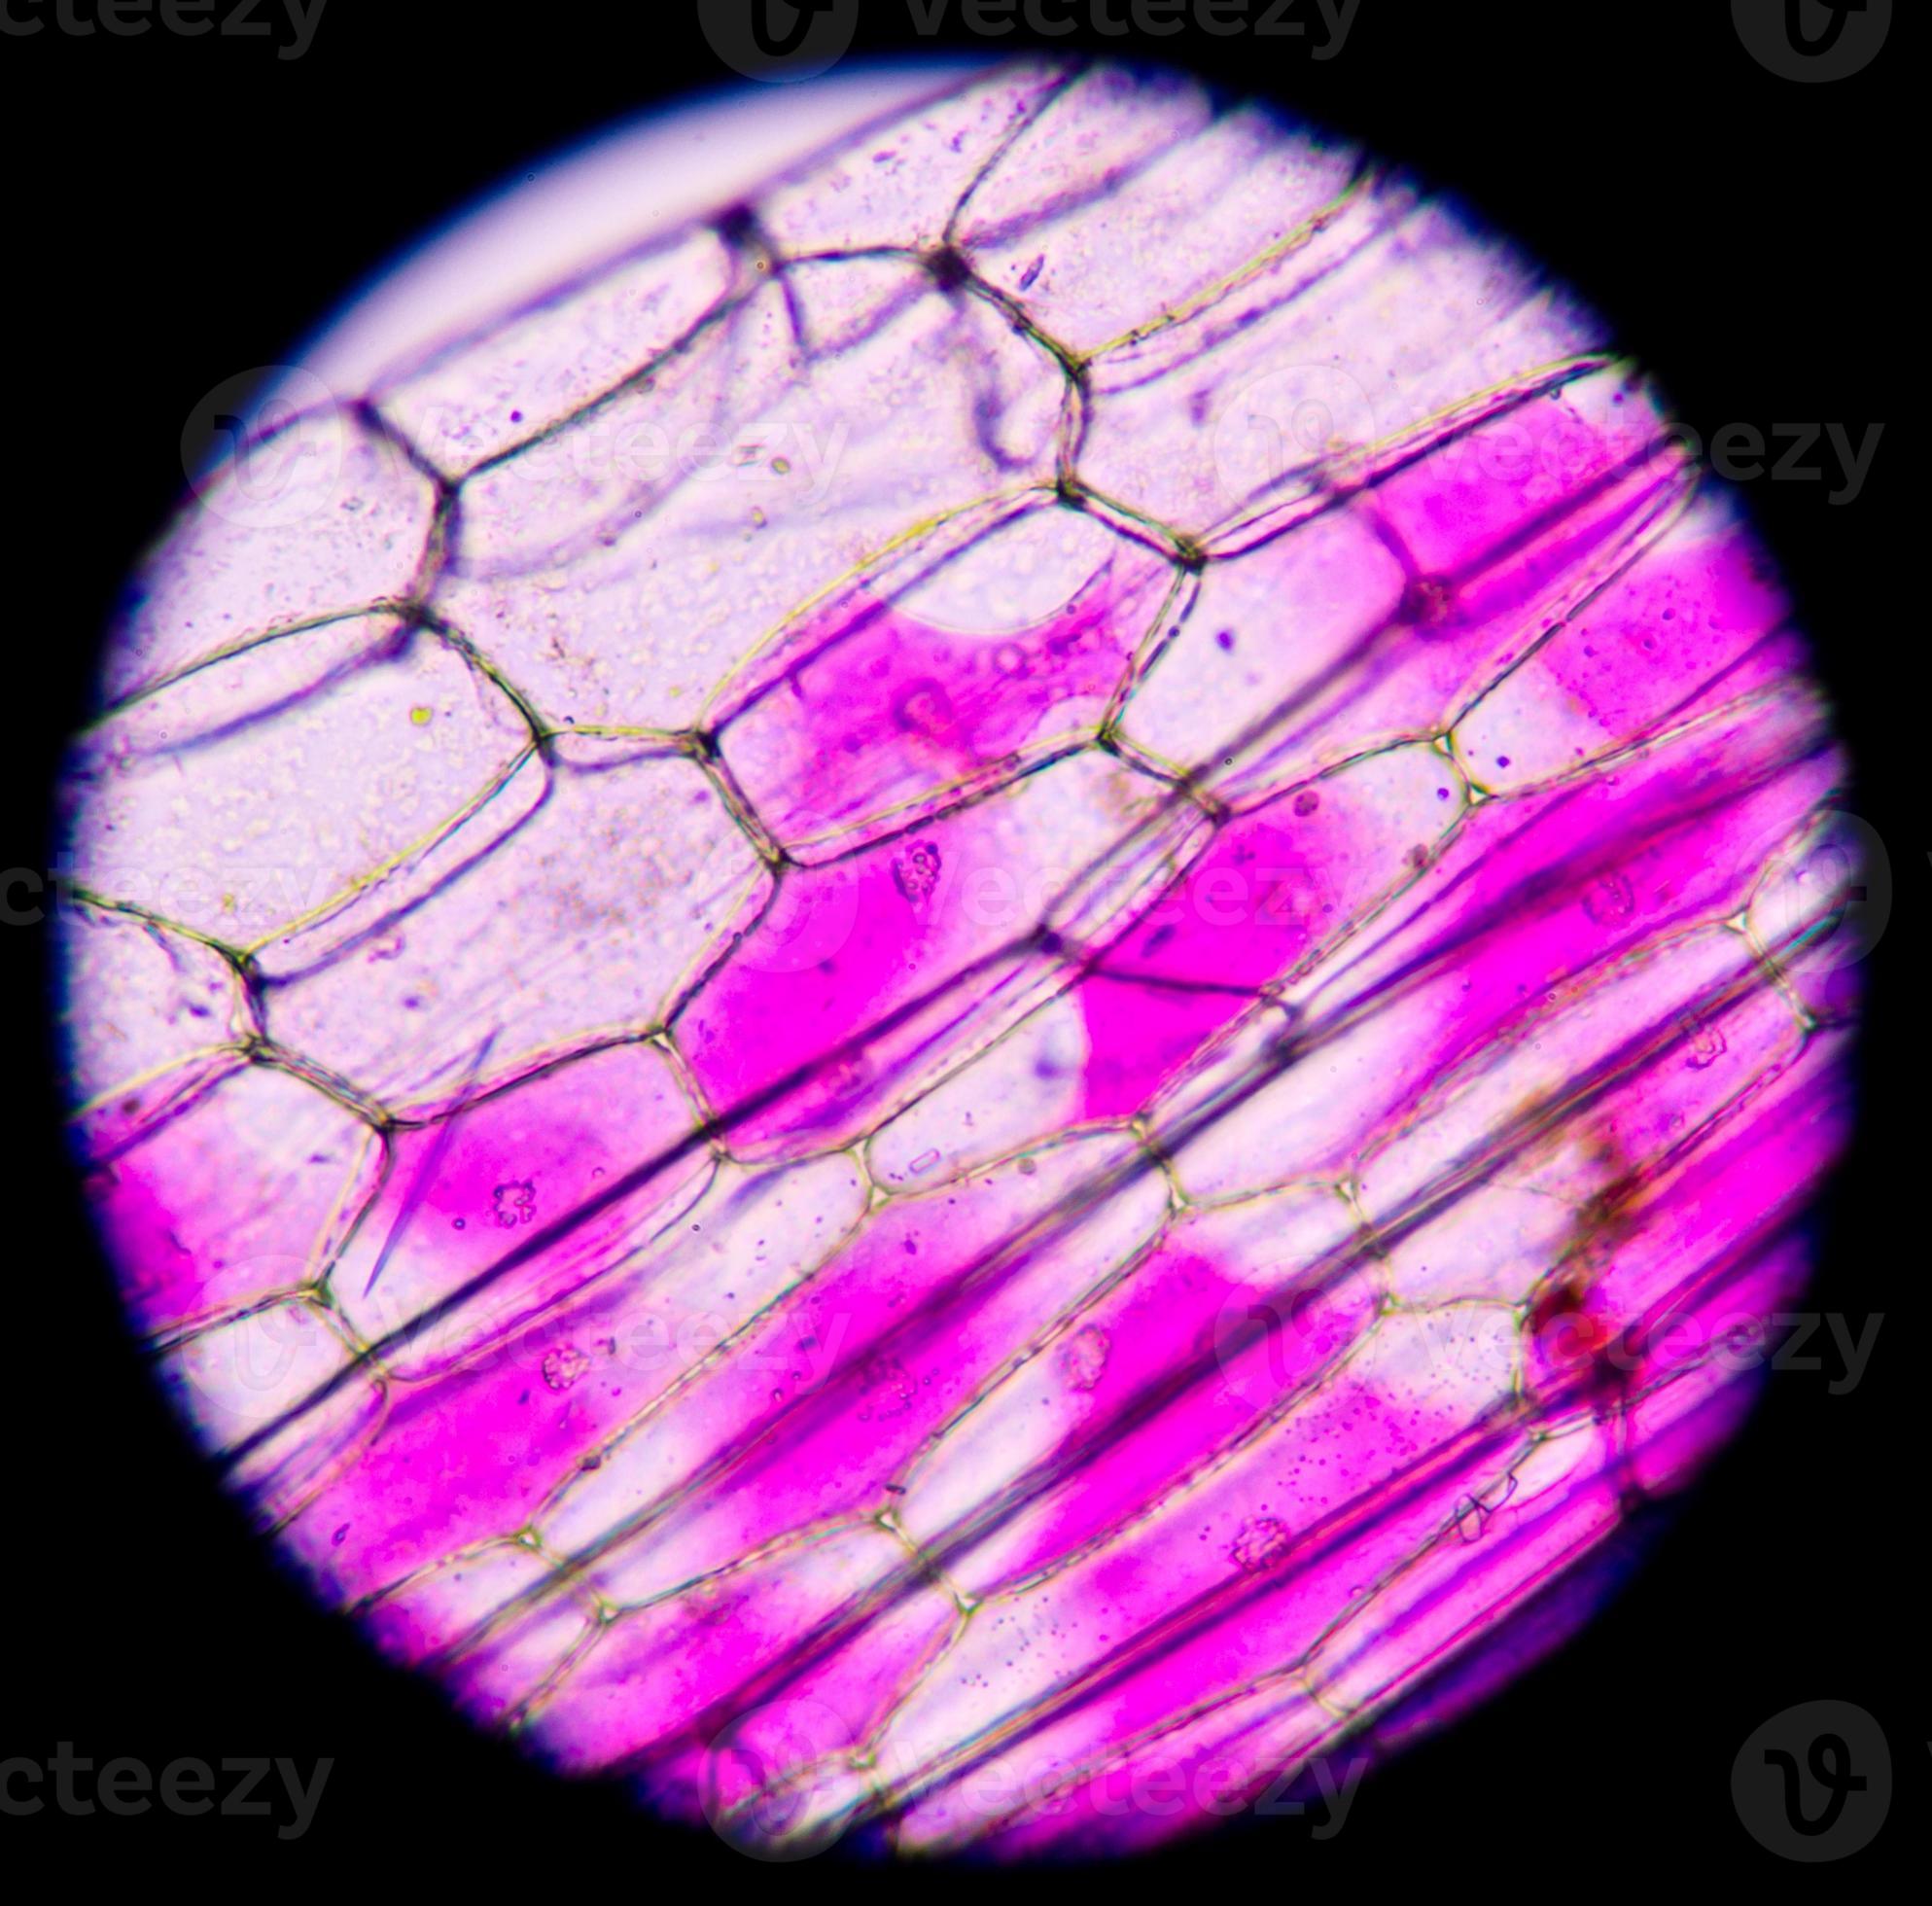 klint skelet Aftensmad plant cells under microscope.400x 937256 Stock Photo at Vecteezy